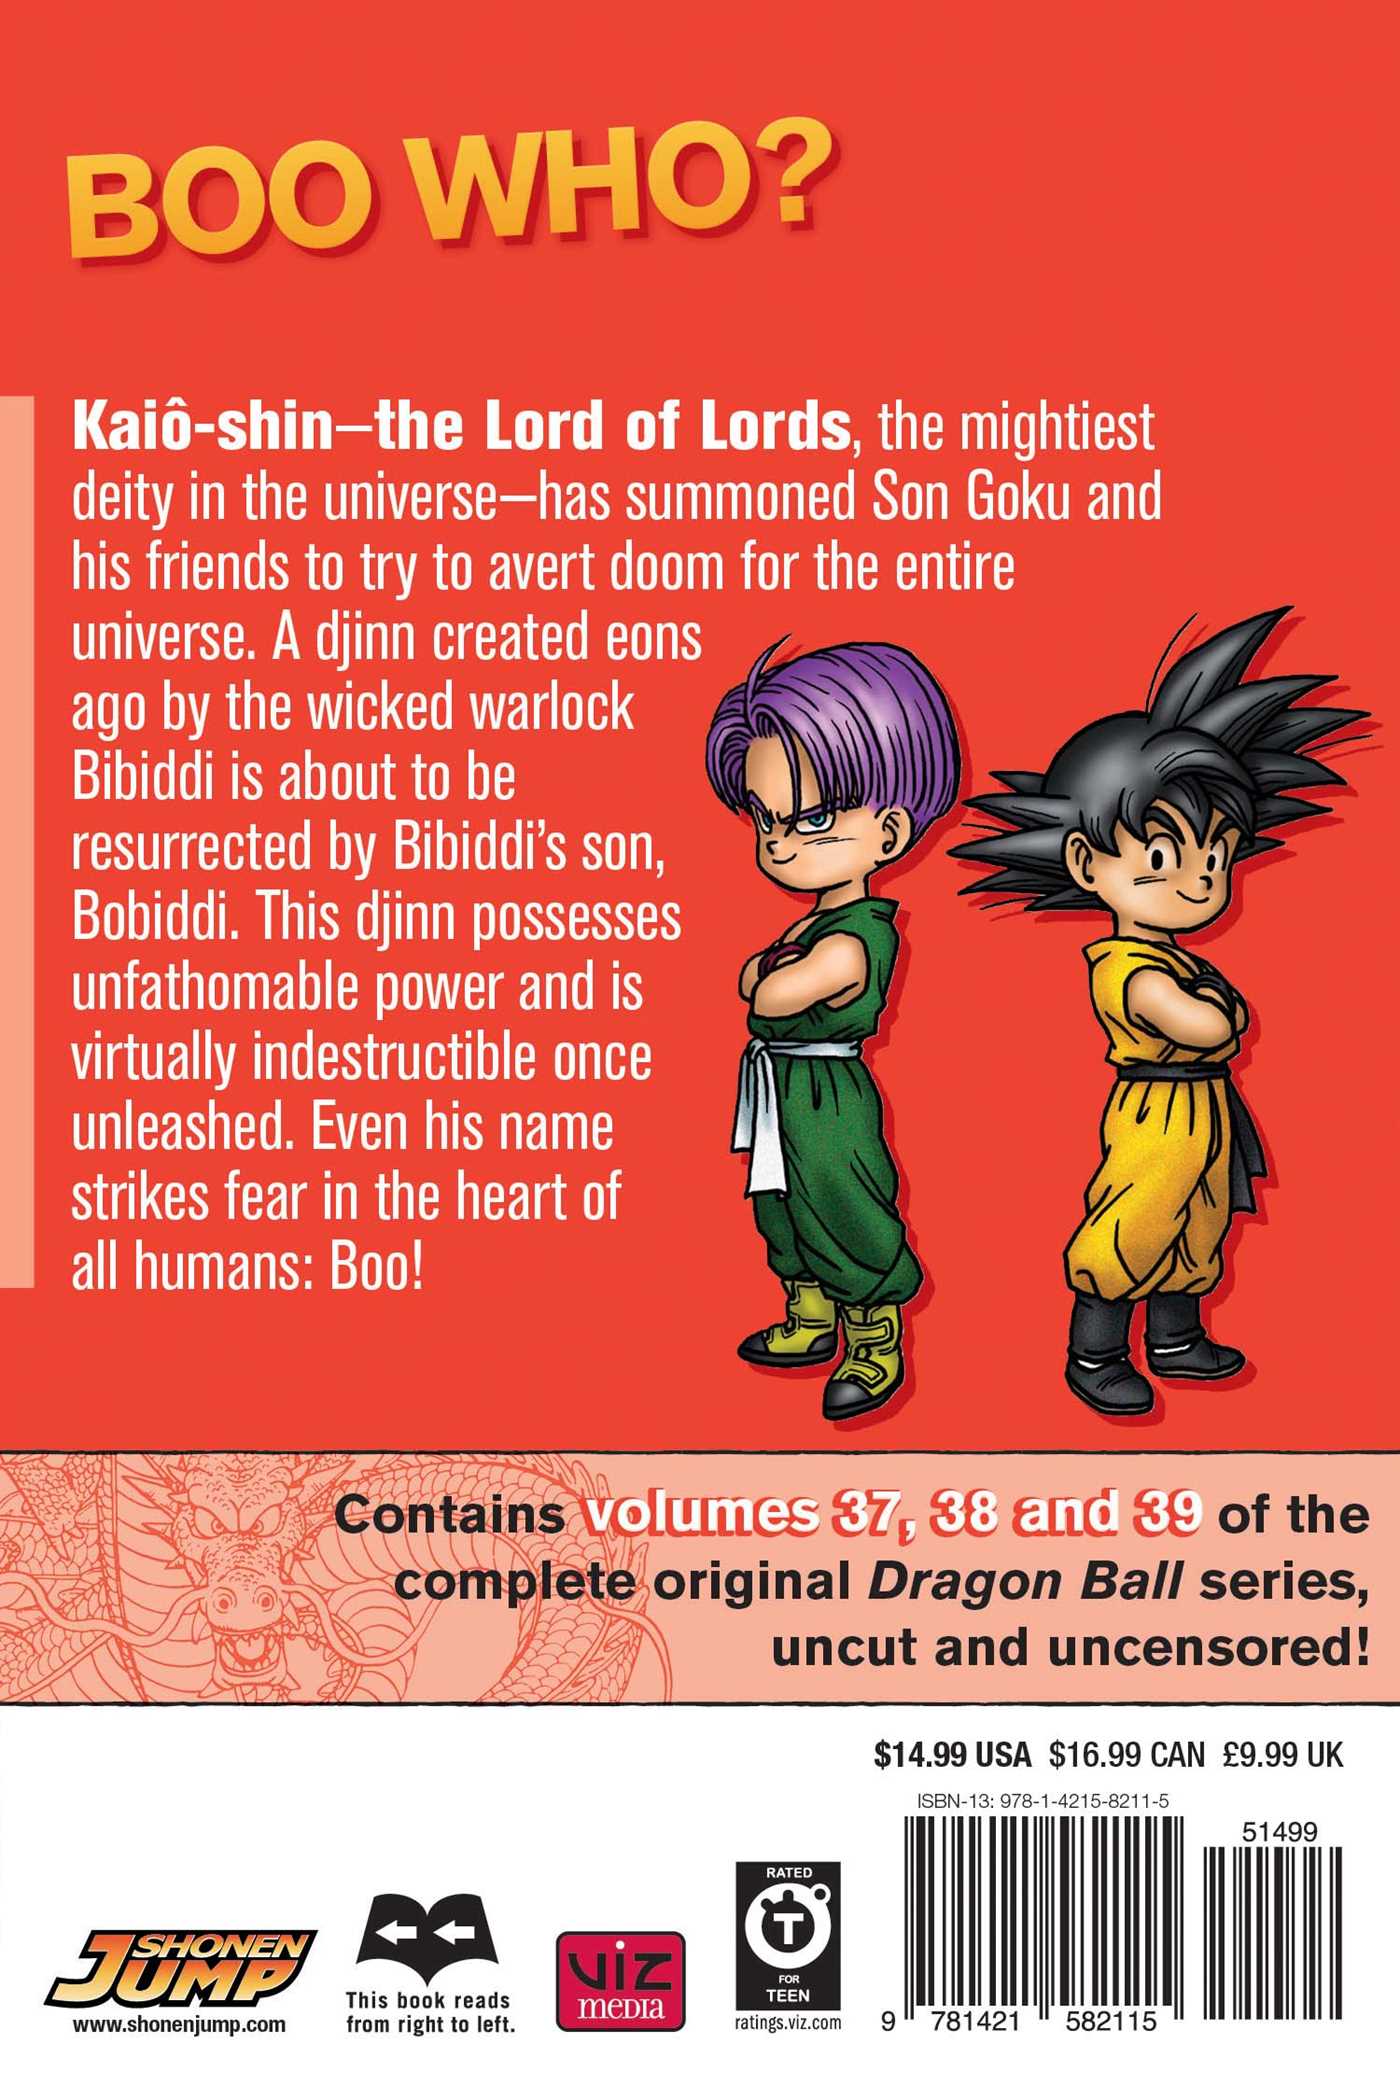 Dragon Ball Z Manga of 3 Volumes in 1 Omnibus book Vol. 1